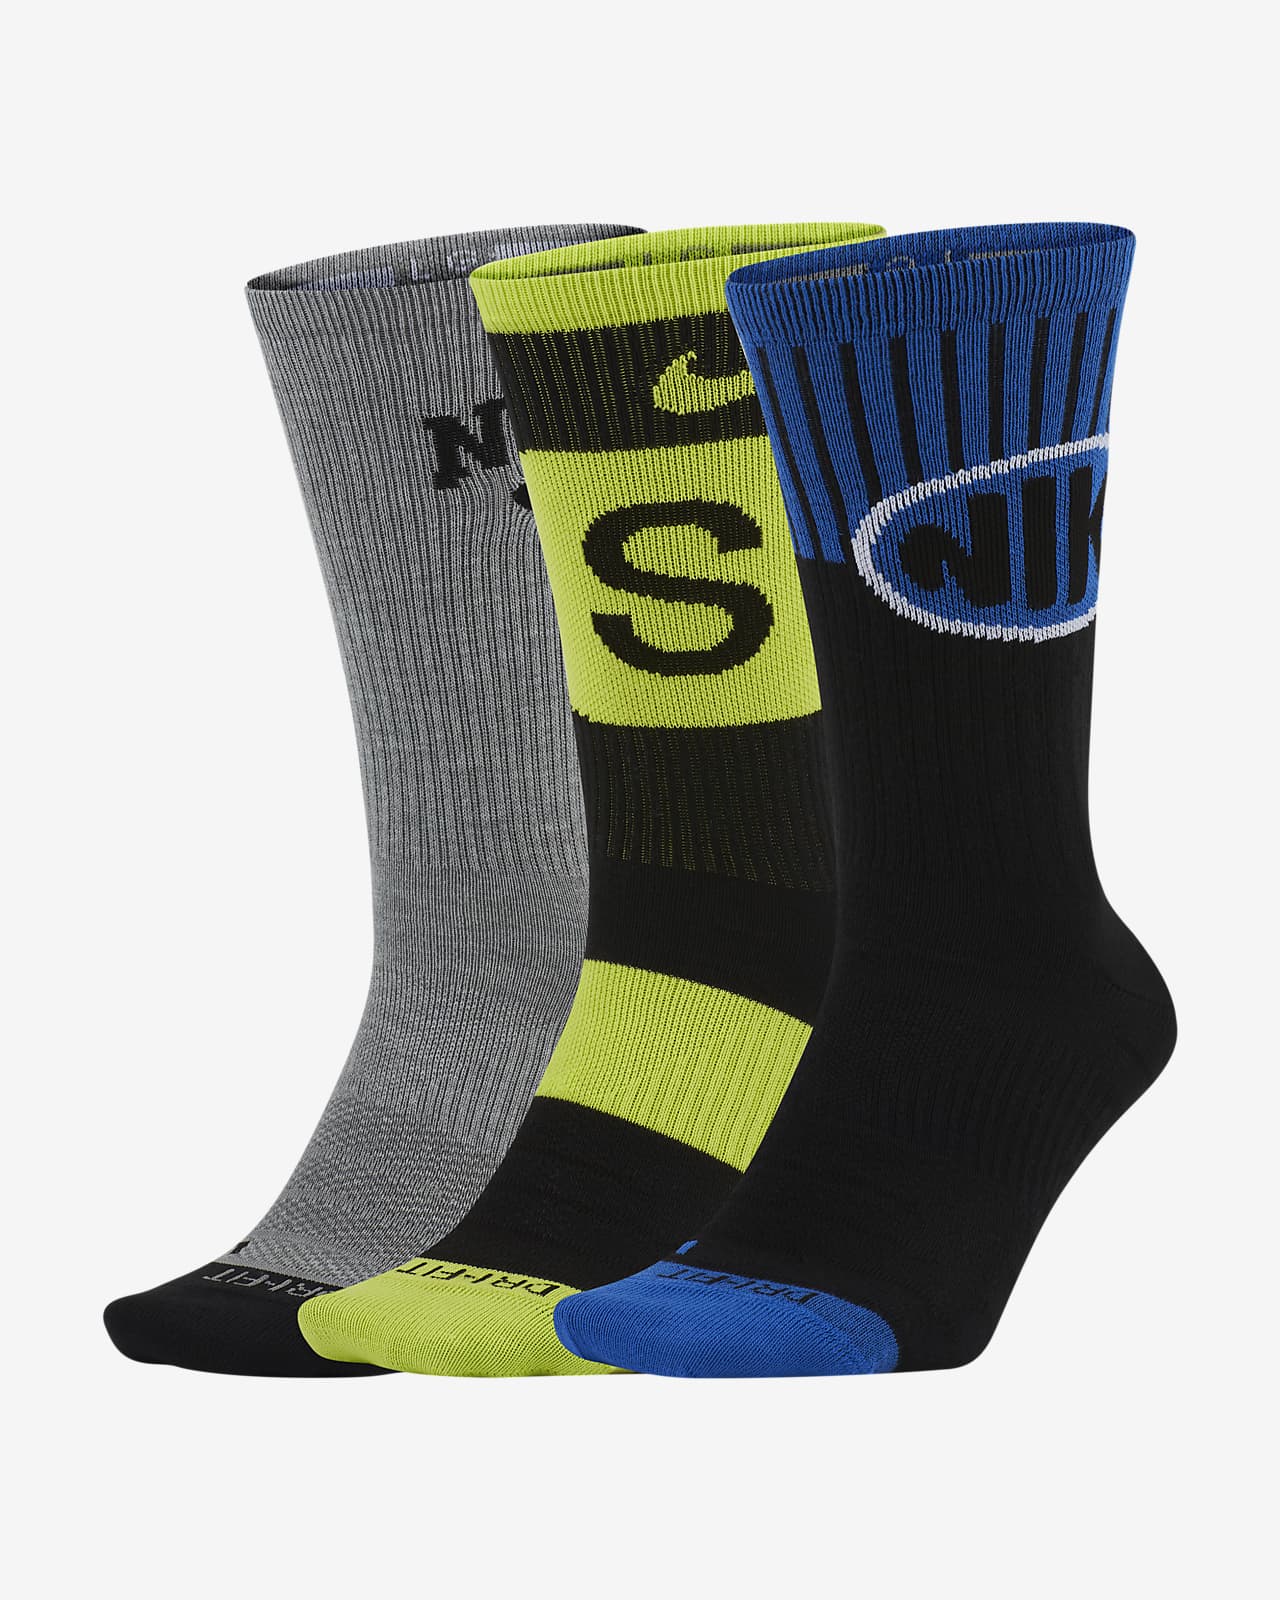 nike sb everyday max lightweight crew socks